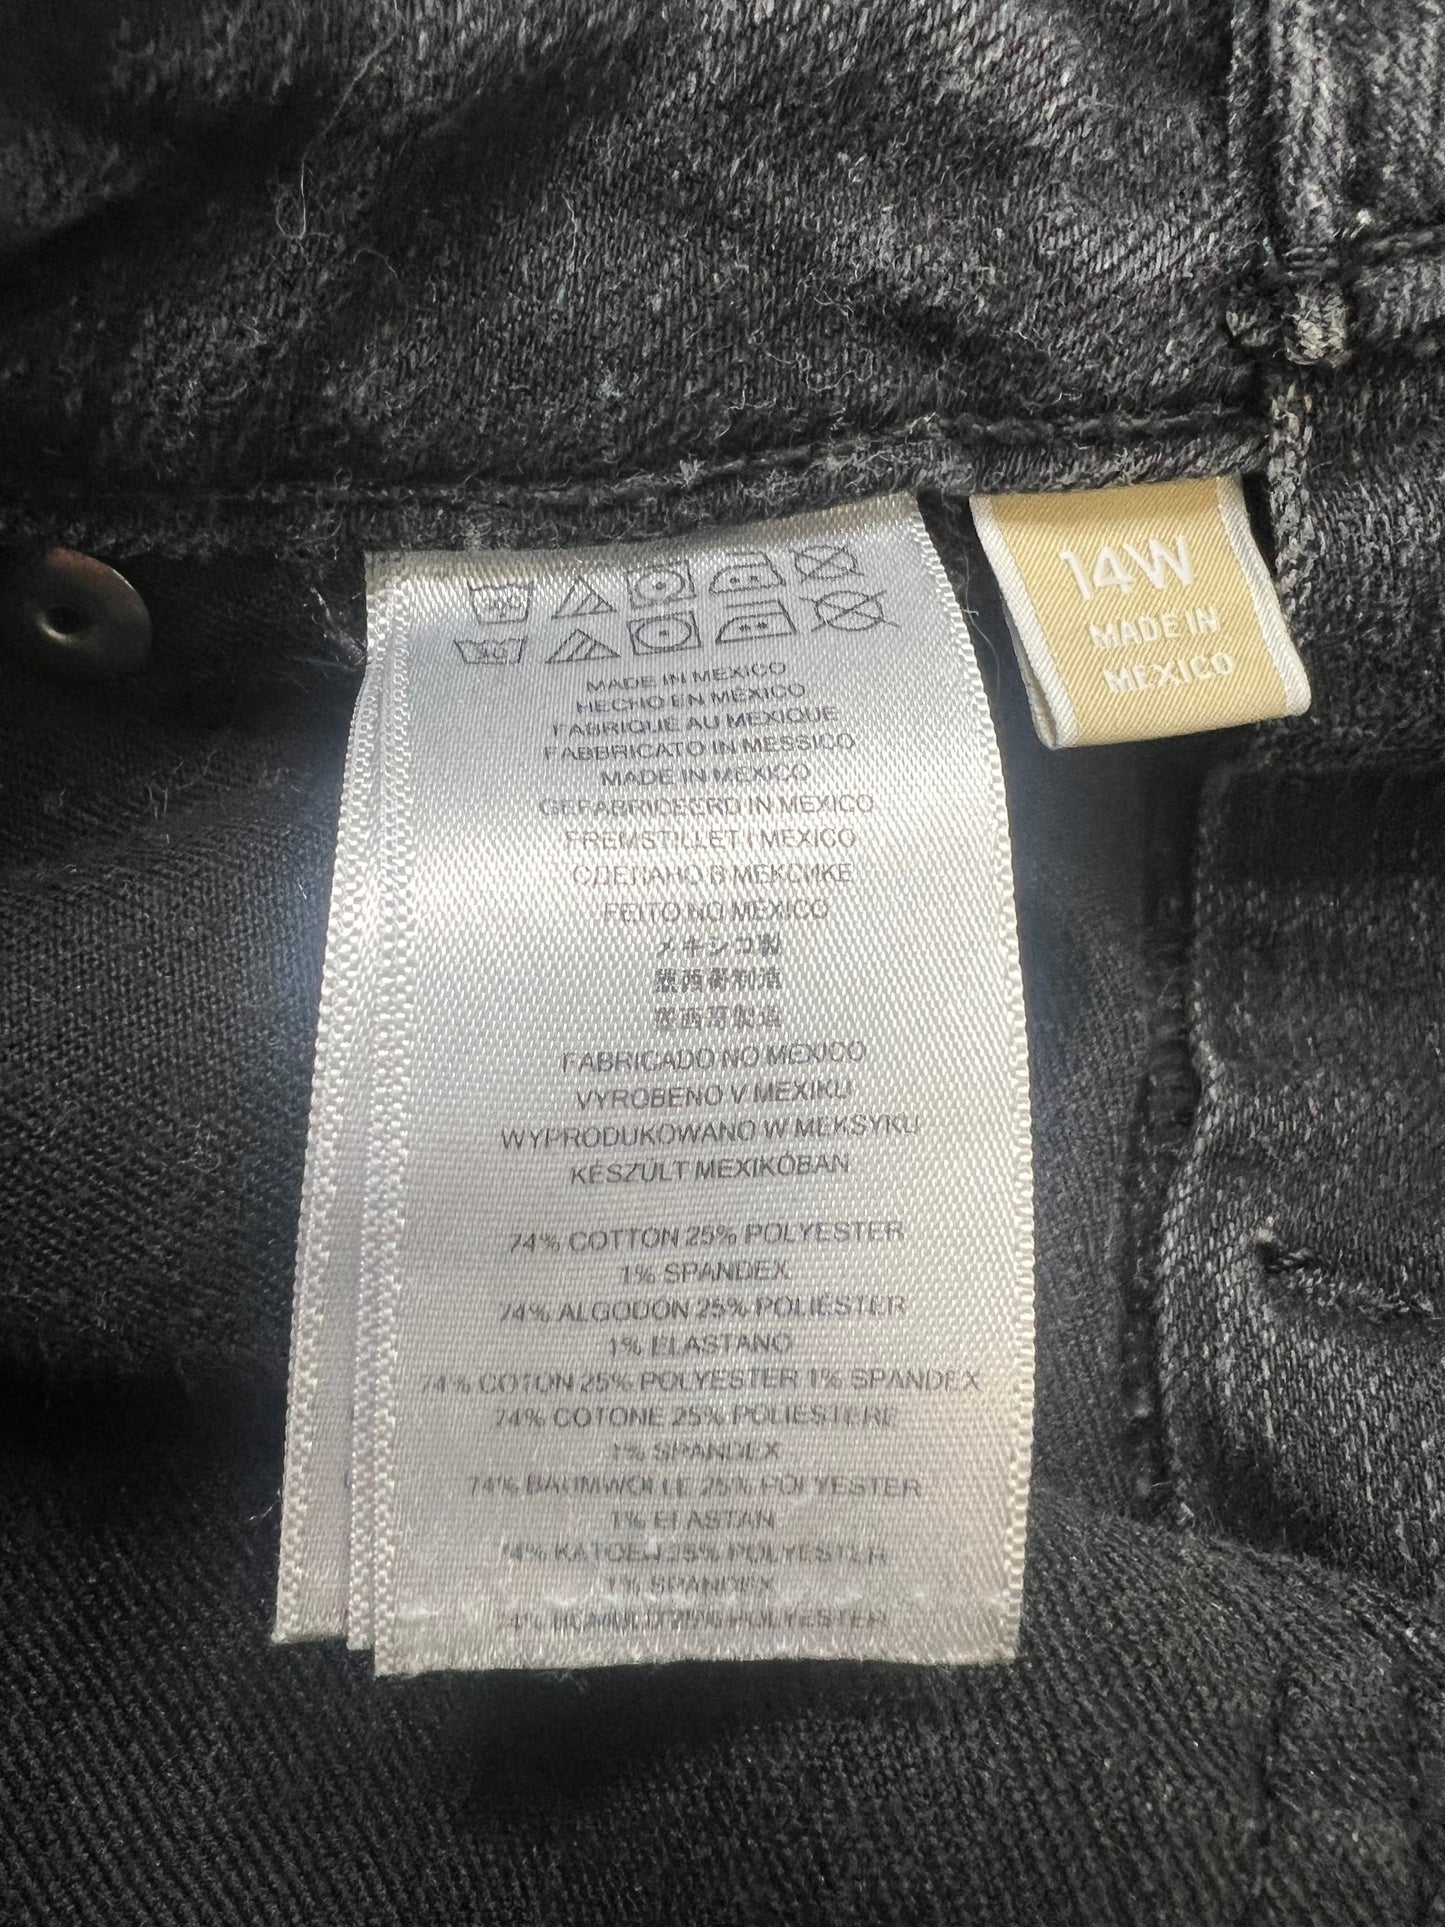 Black Jeans Designer Michael Kors, Size 14